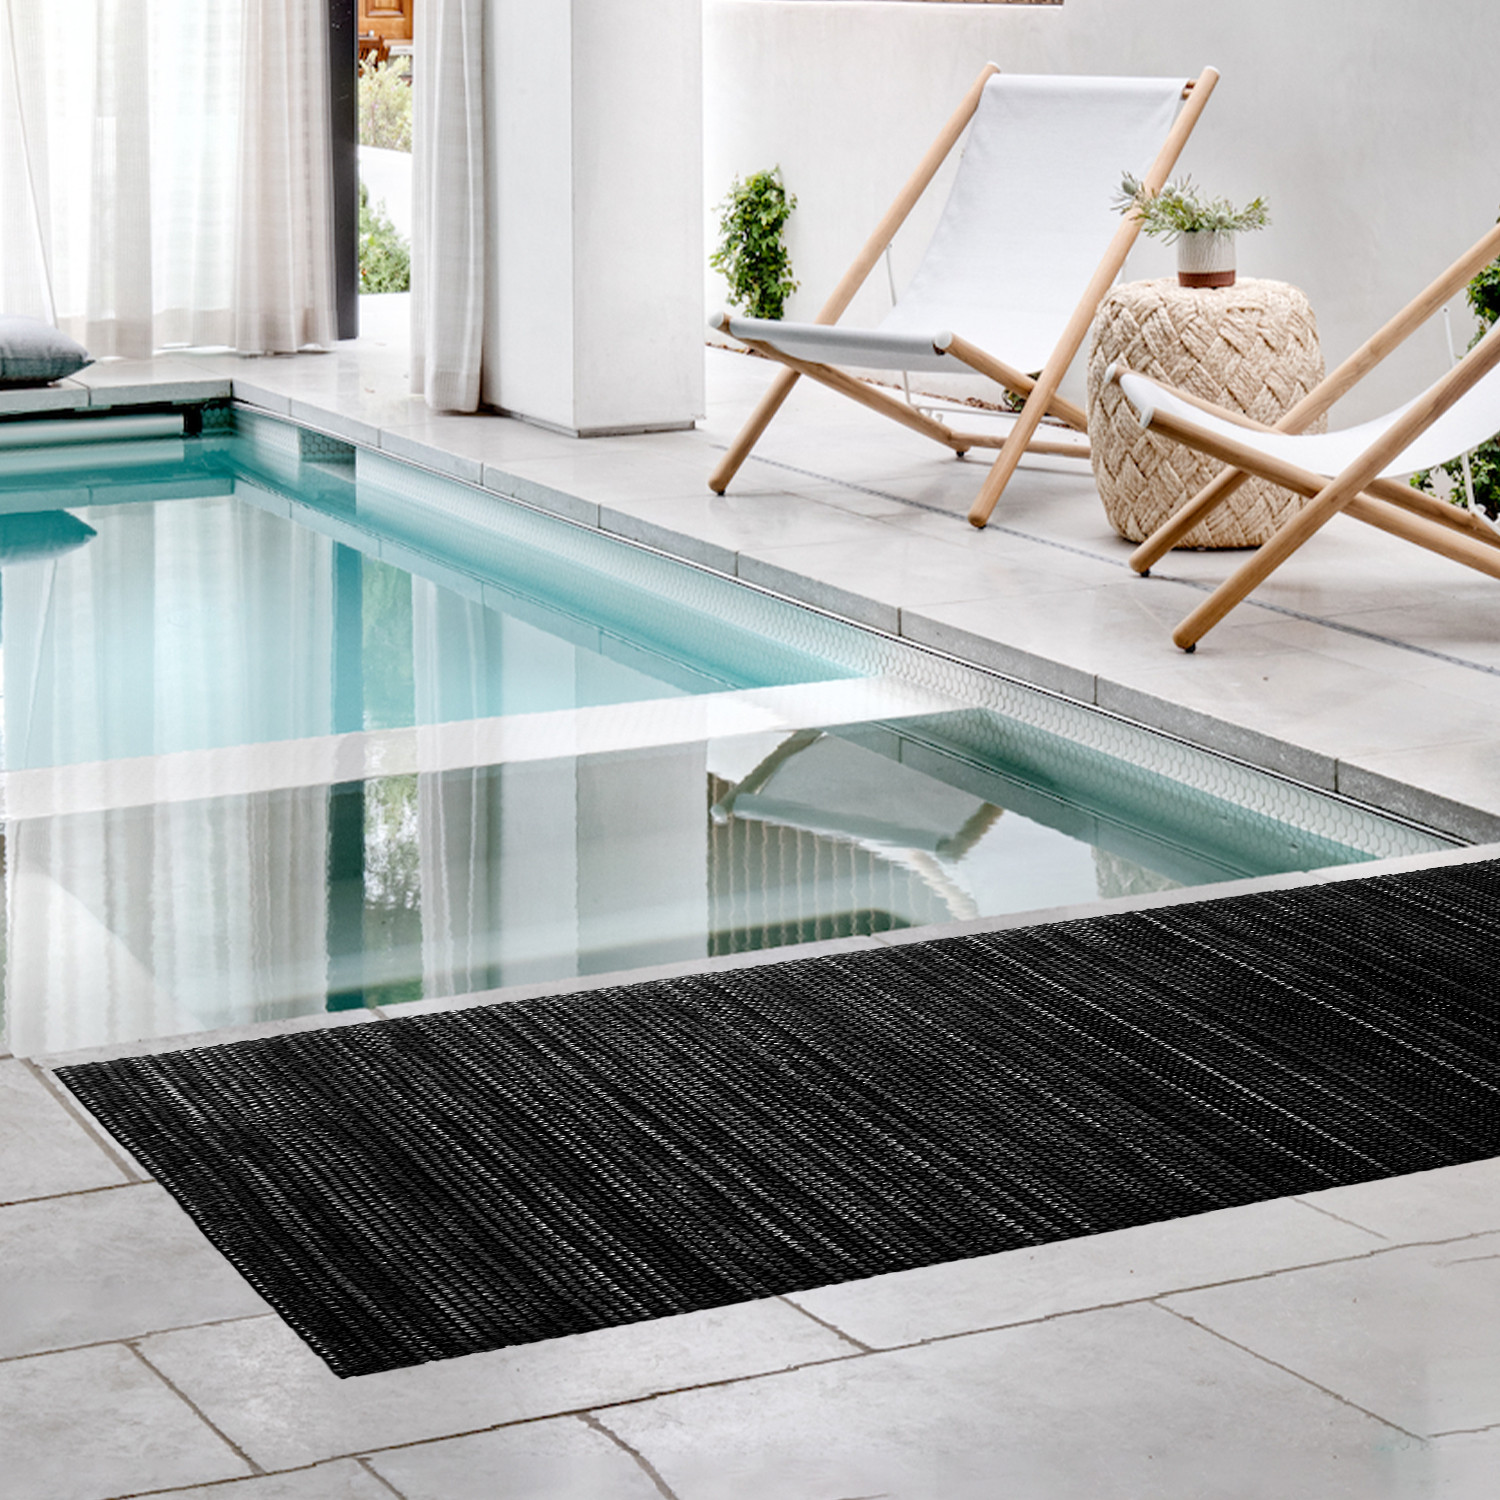 Kuber Industries Rubber Waterproof Anti-Skid Swimming Pool Mat|Shower Mat|Rainmat For Entrance Area,Bathroom,2 x 8 Feet (Black)